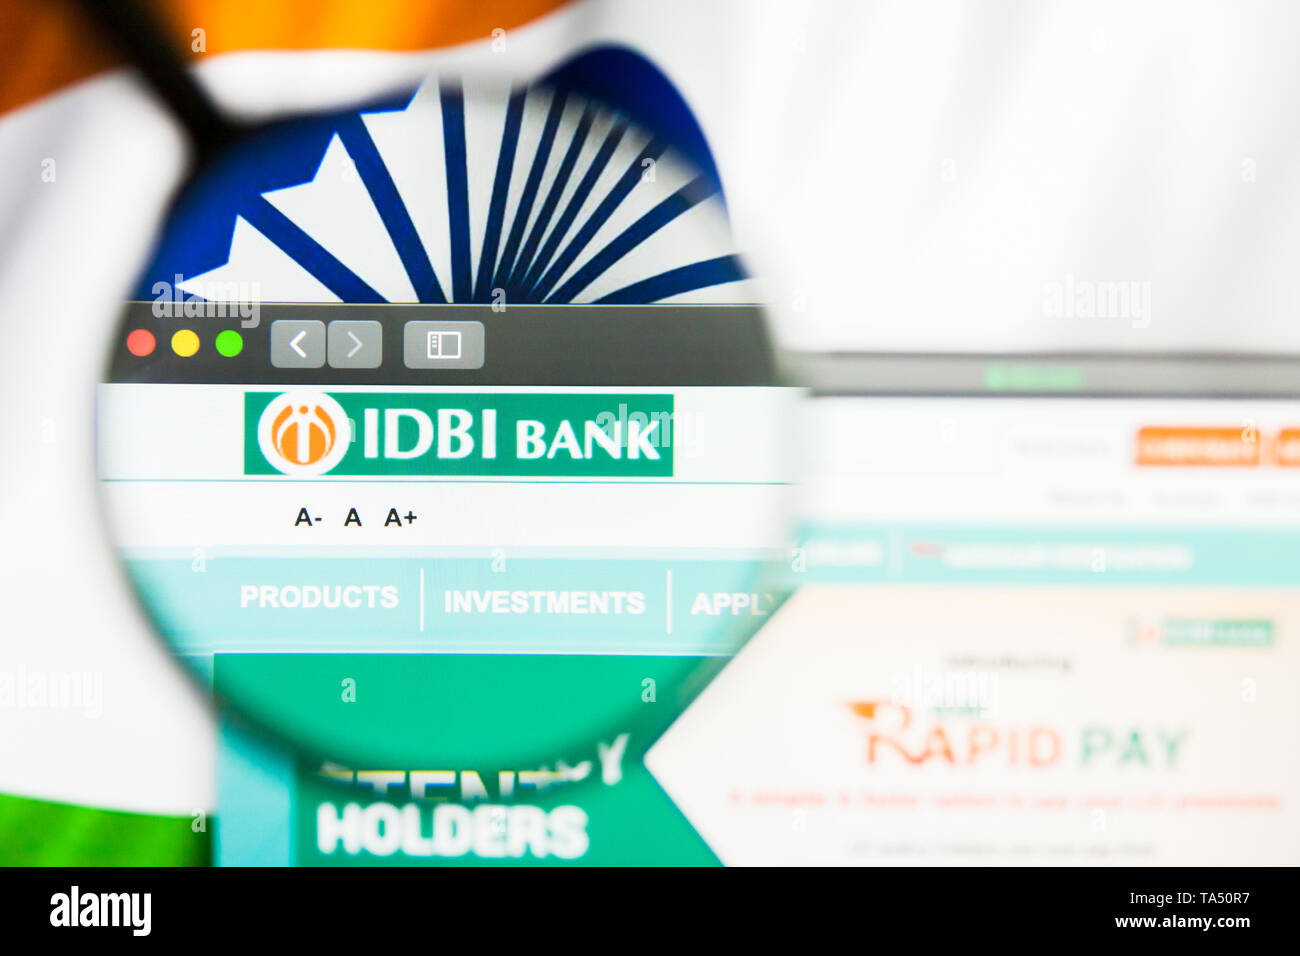 New York, New York State, USA - 21 May 2019: Illustrative Editorial of indian company IDBI Bank website homepage. IDBI Bank logo visible on screen. Stock Photo